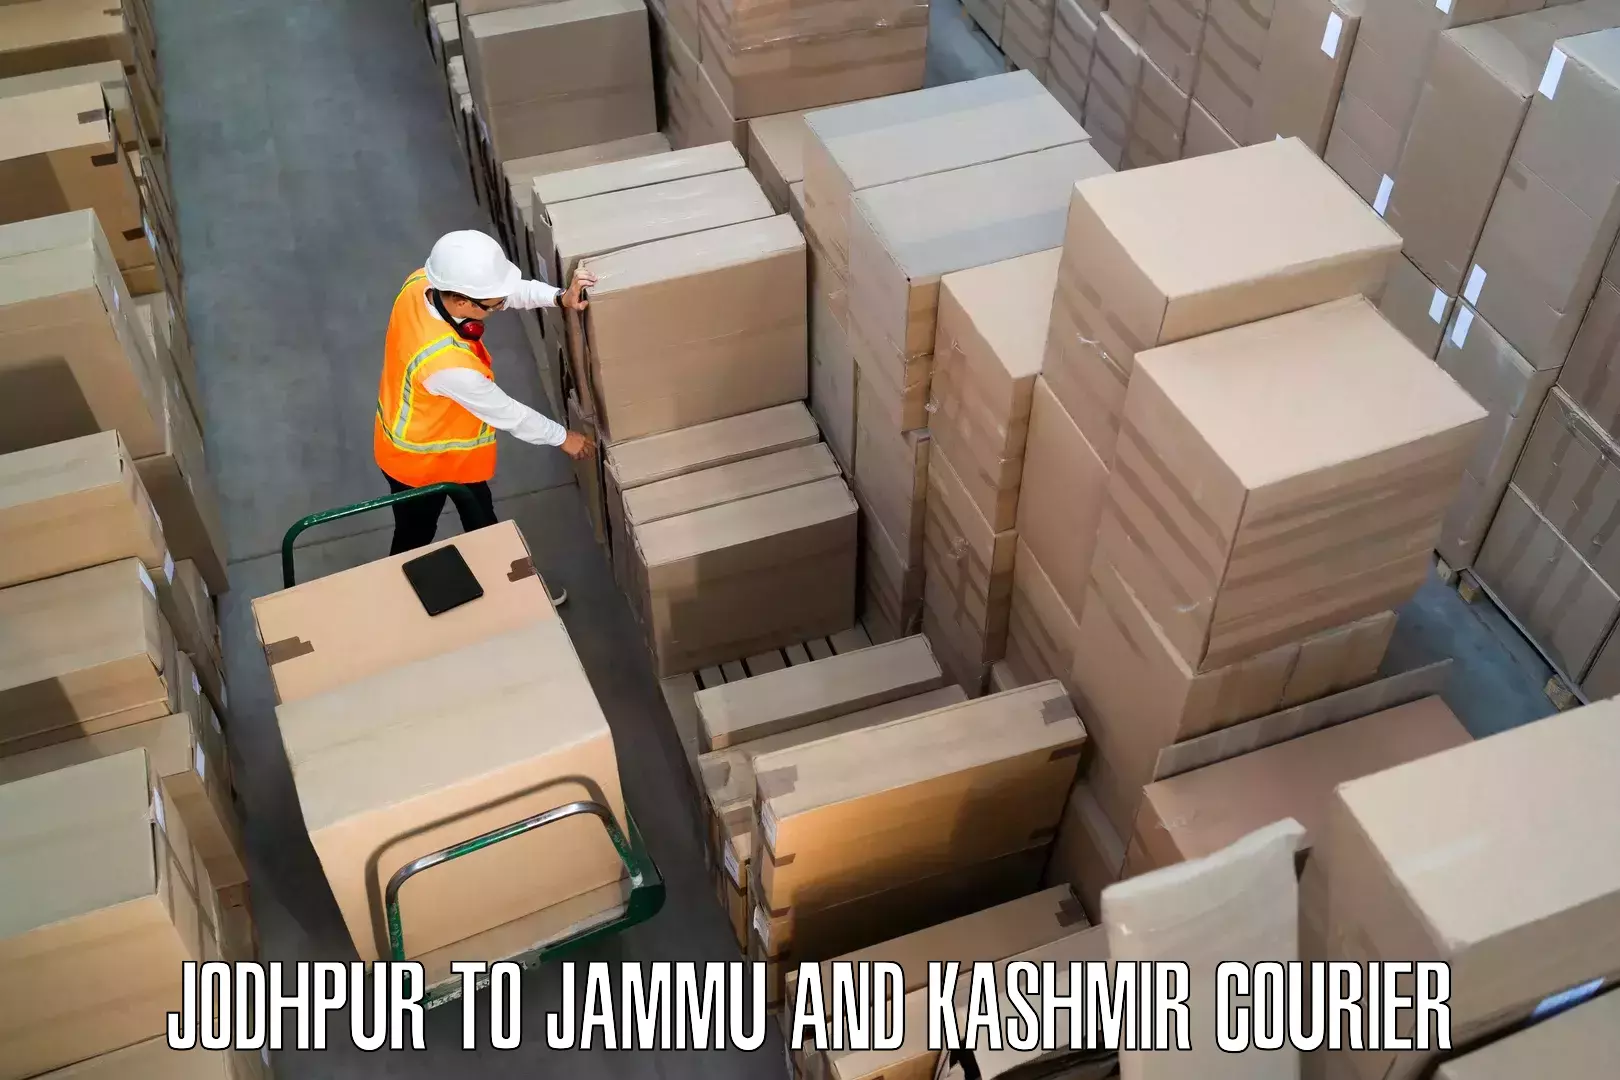 Furniture delivery service Jodhpur to Kupwara